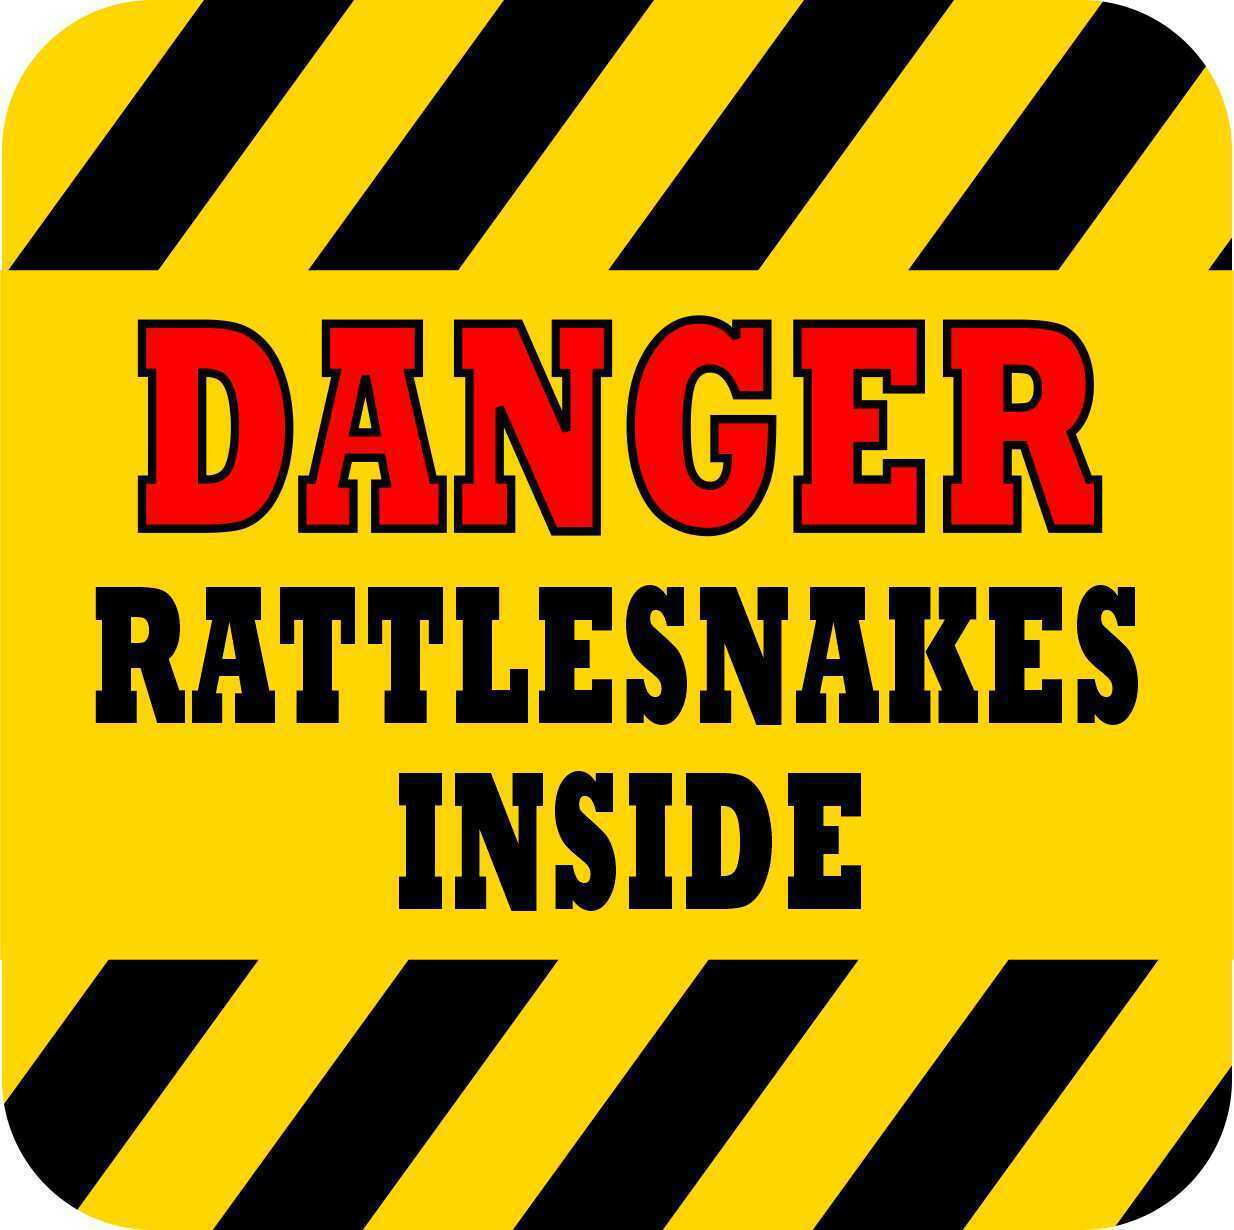 4in x 4in Danger Rattlesnakes Inside Vinyl Sticker Car Vehicle Bumper Decal